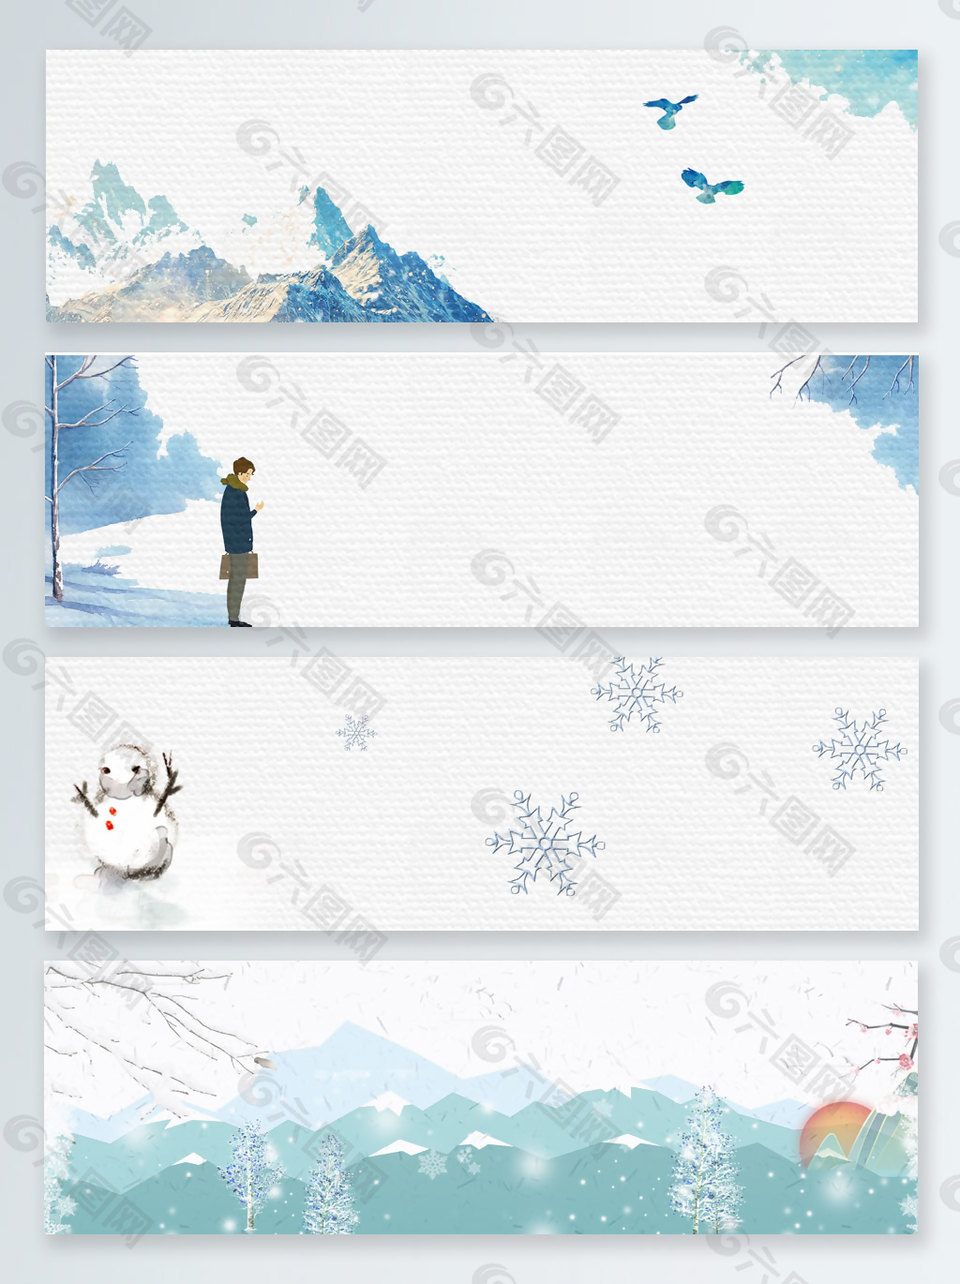 冬季手绘大雪banner海报背景